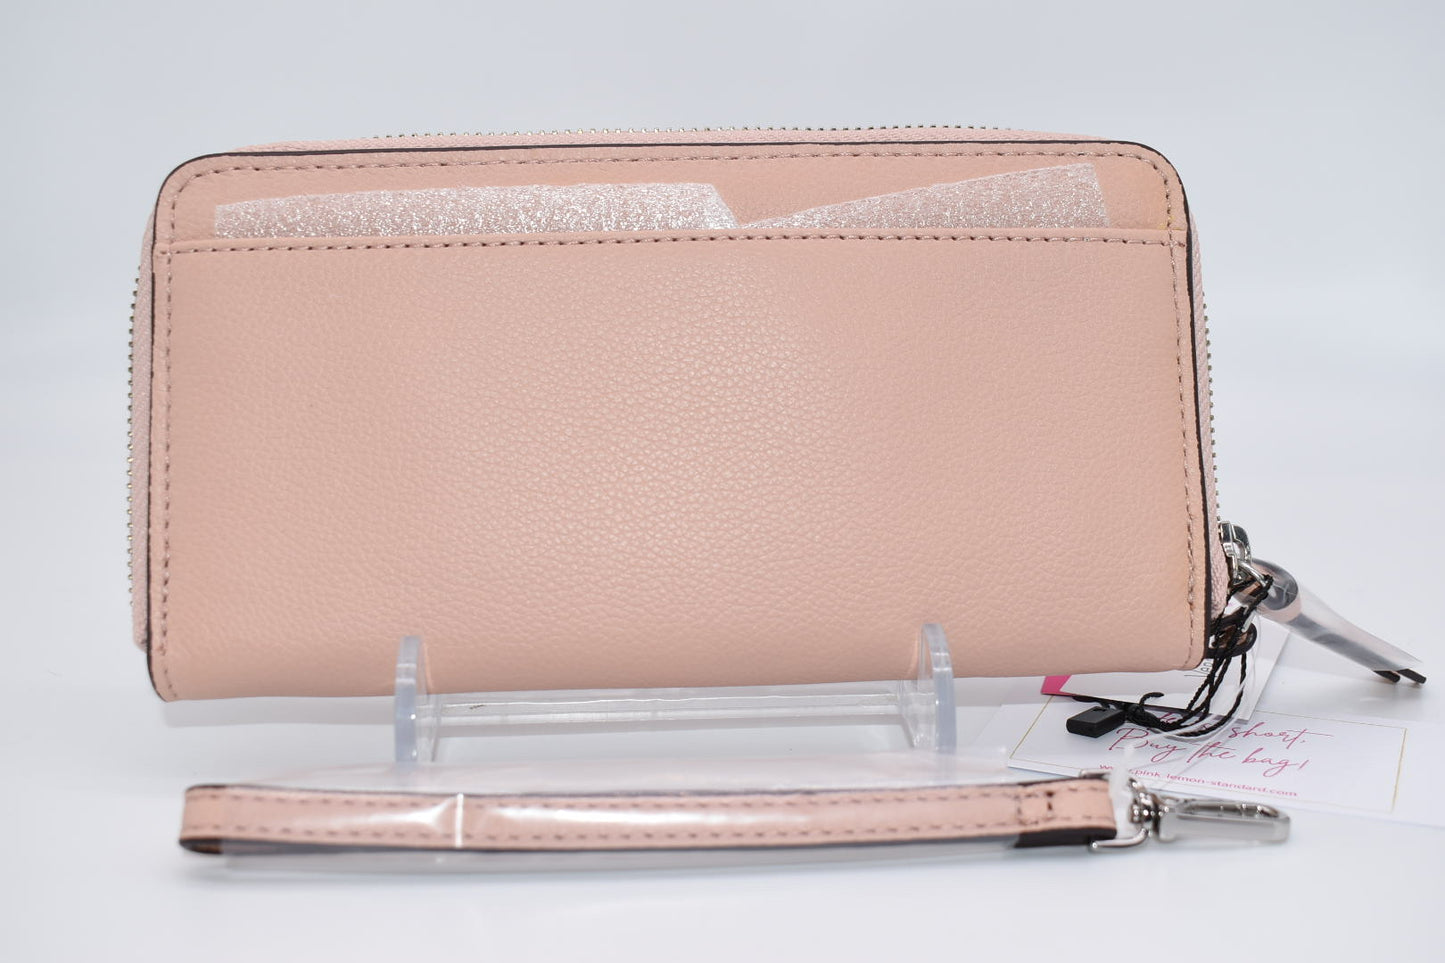 Vera Bradley Carryall RFID Leather Accordion Wristlet in Pink Sand